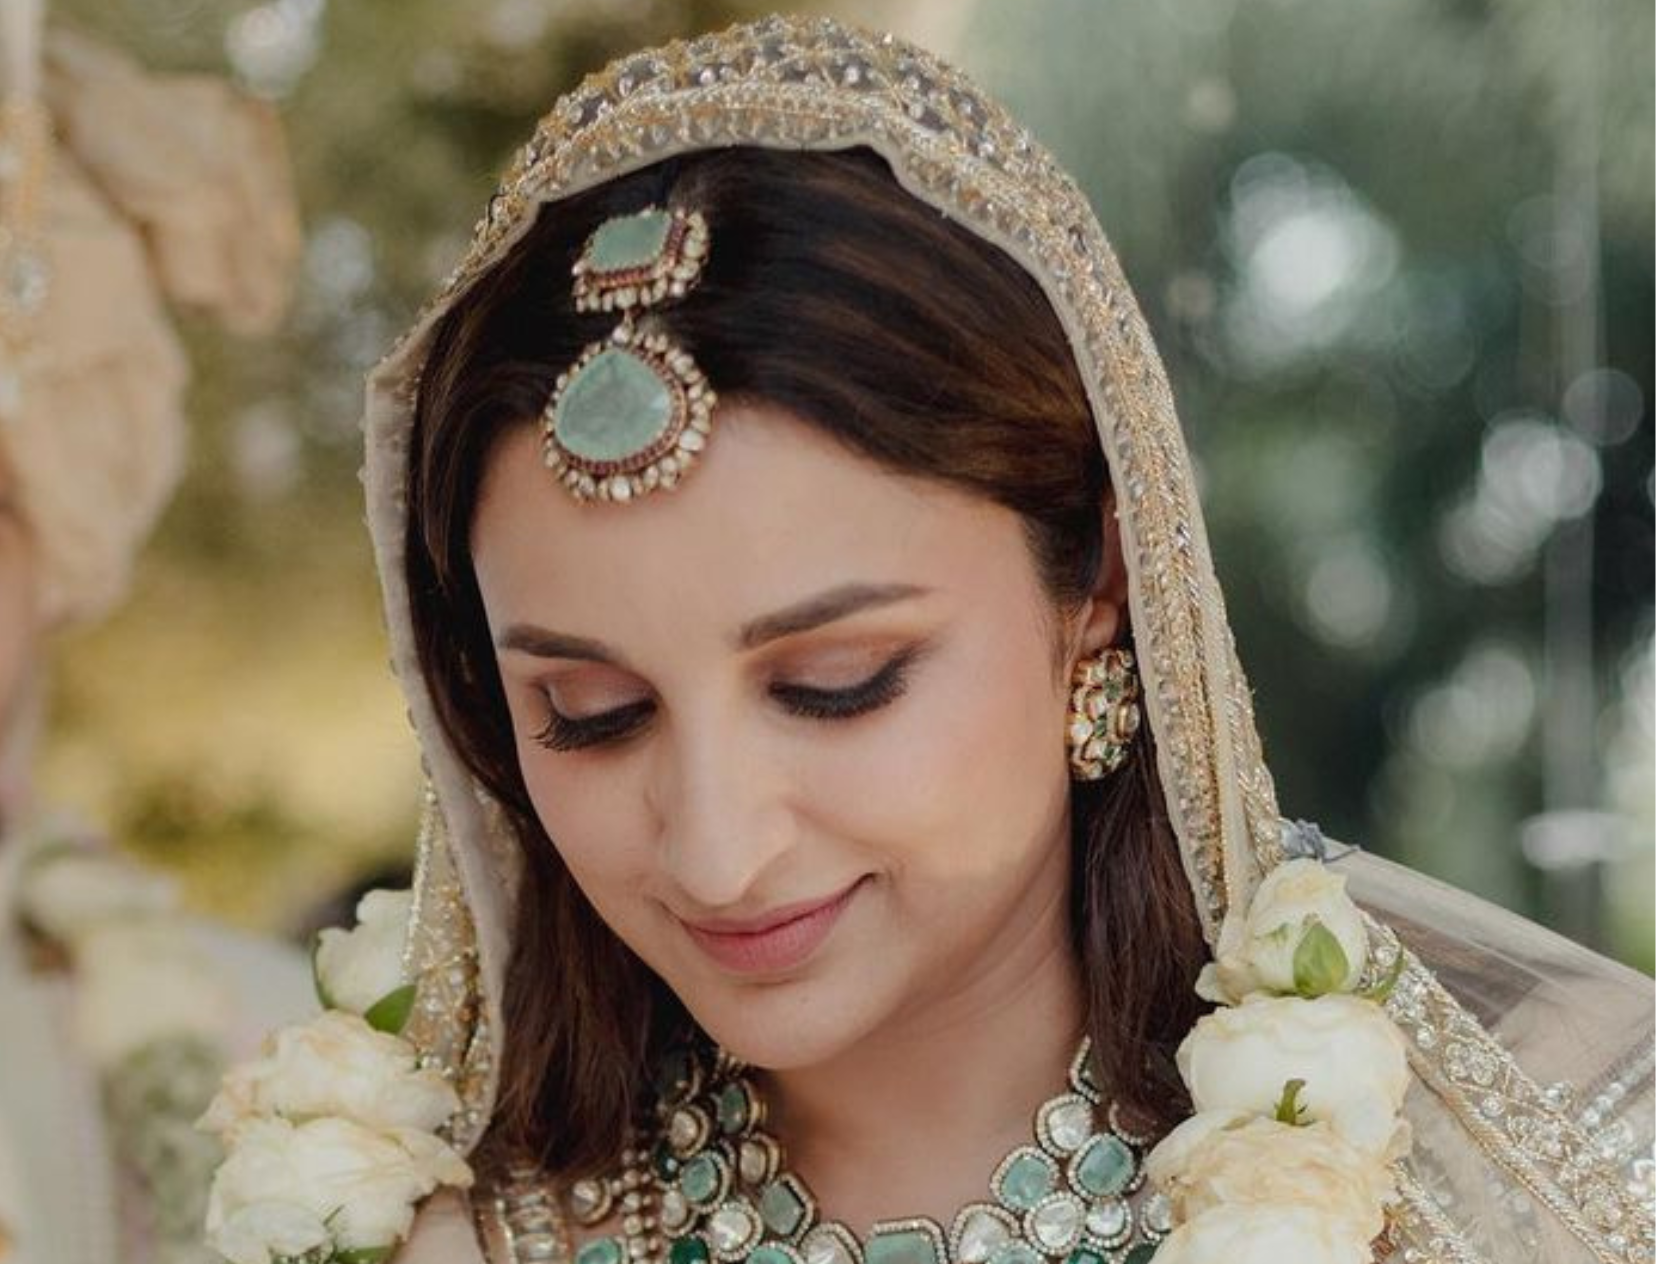 Parineeti Chopra's Bridal Makeup Look Gave Me Lessons In Minimalism -  India's Largest Digital Community of Women | POPxo